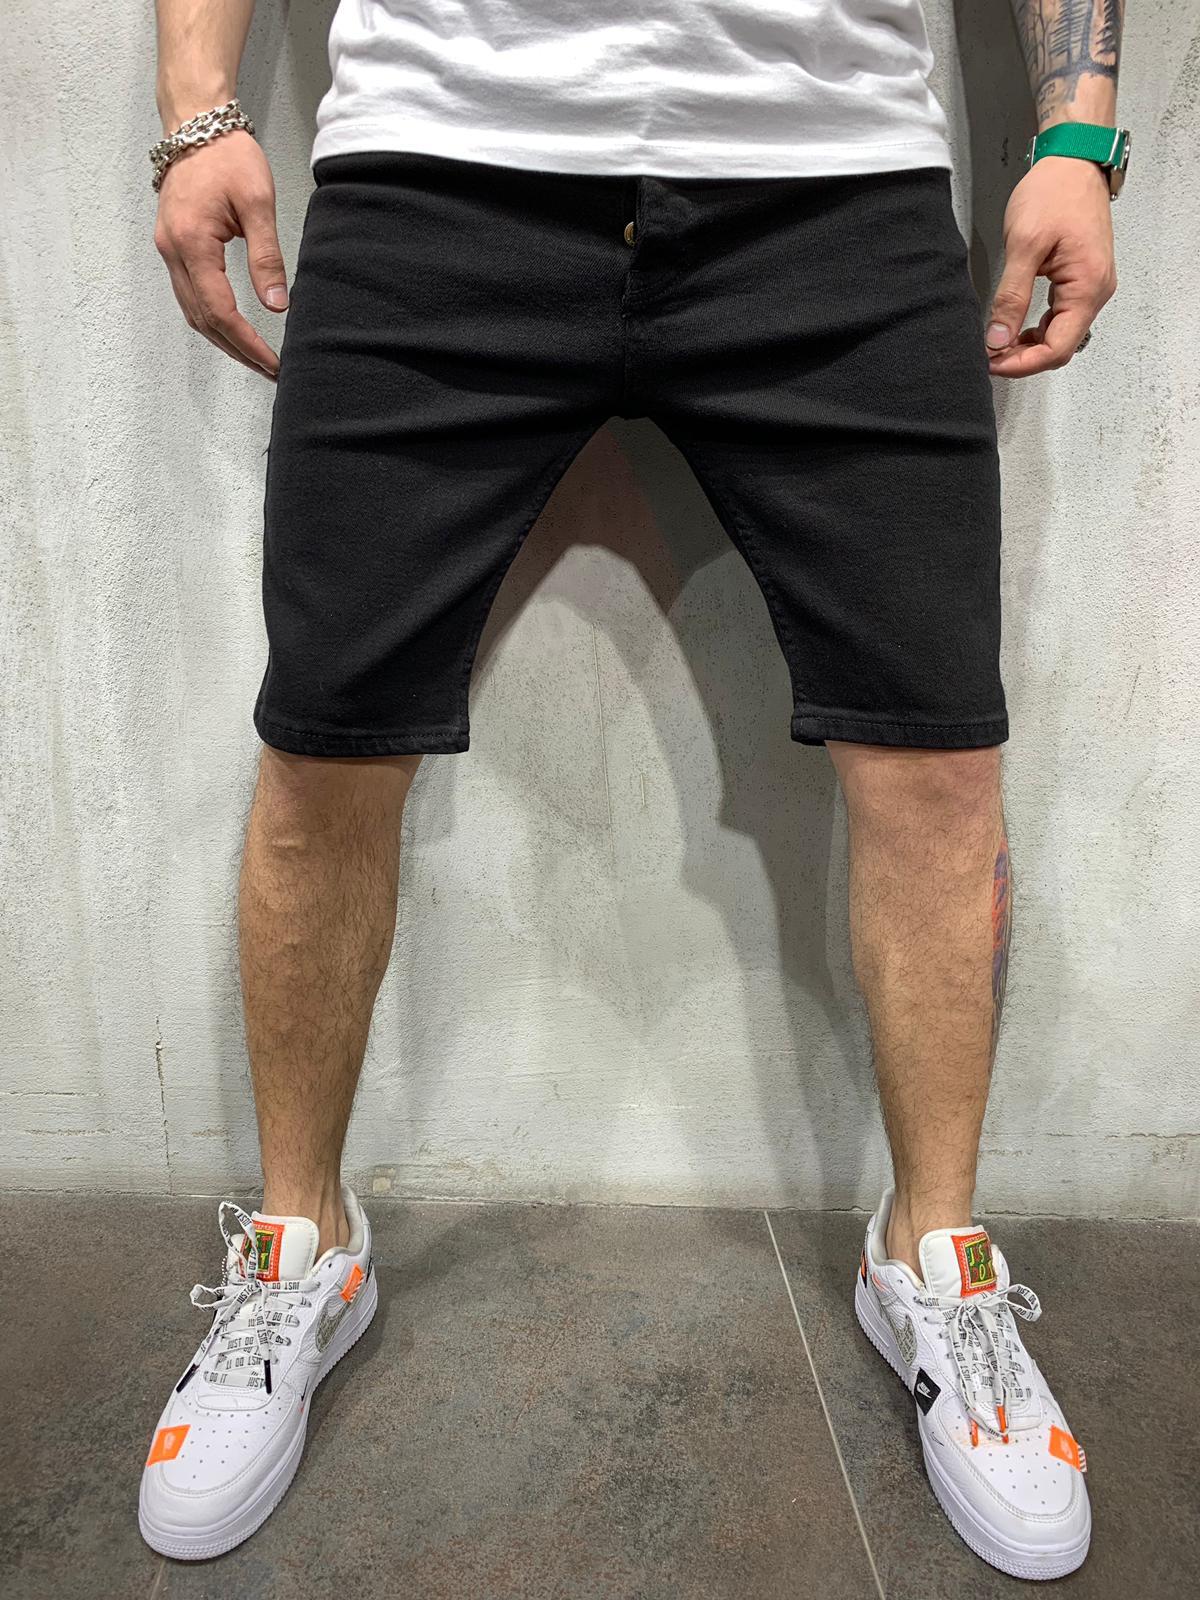 short mens jean shorts